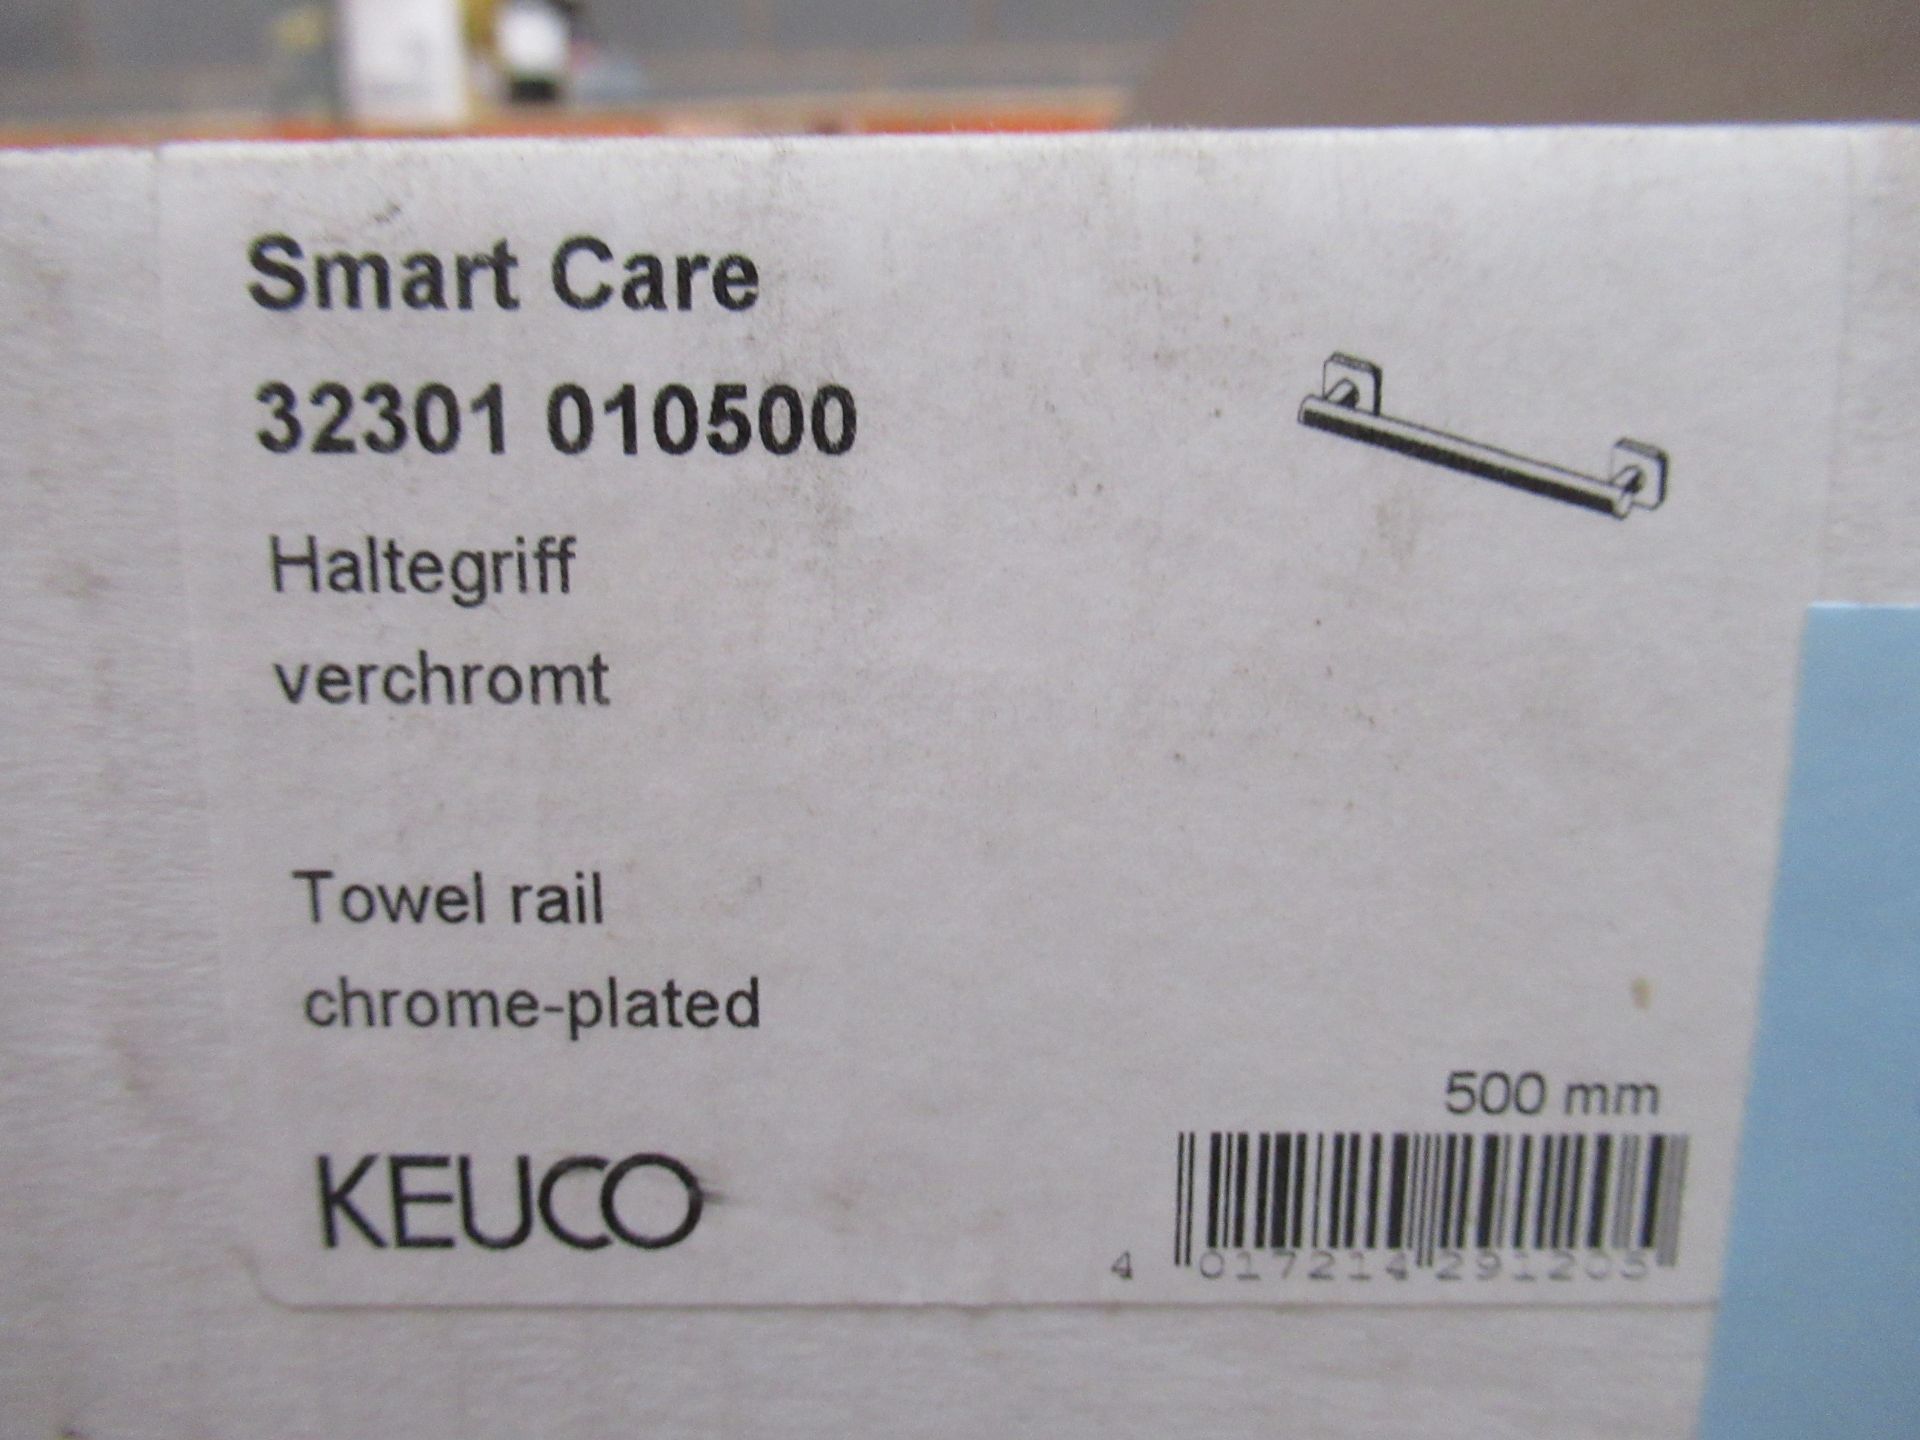 2 x Keuco Smart Care Towel Rail , Chrome Plated, P/N 32301-010500 - Image 2 of 2